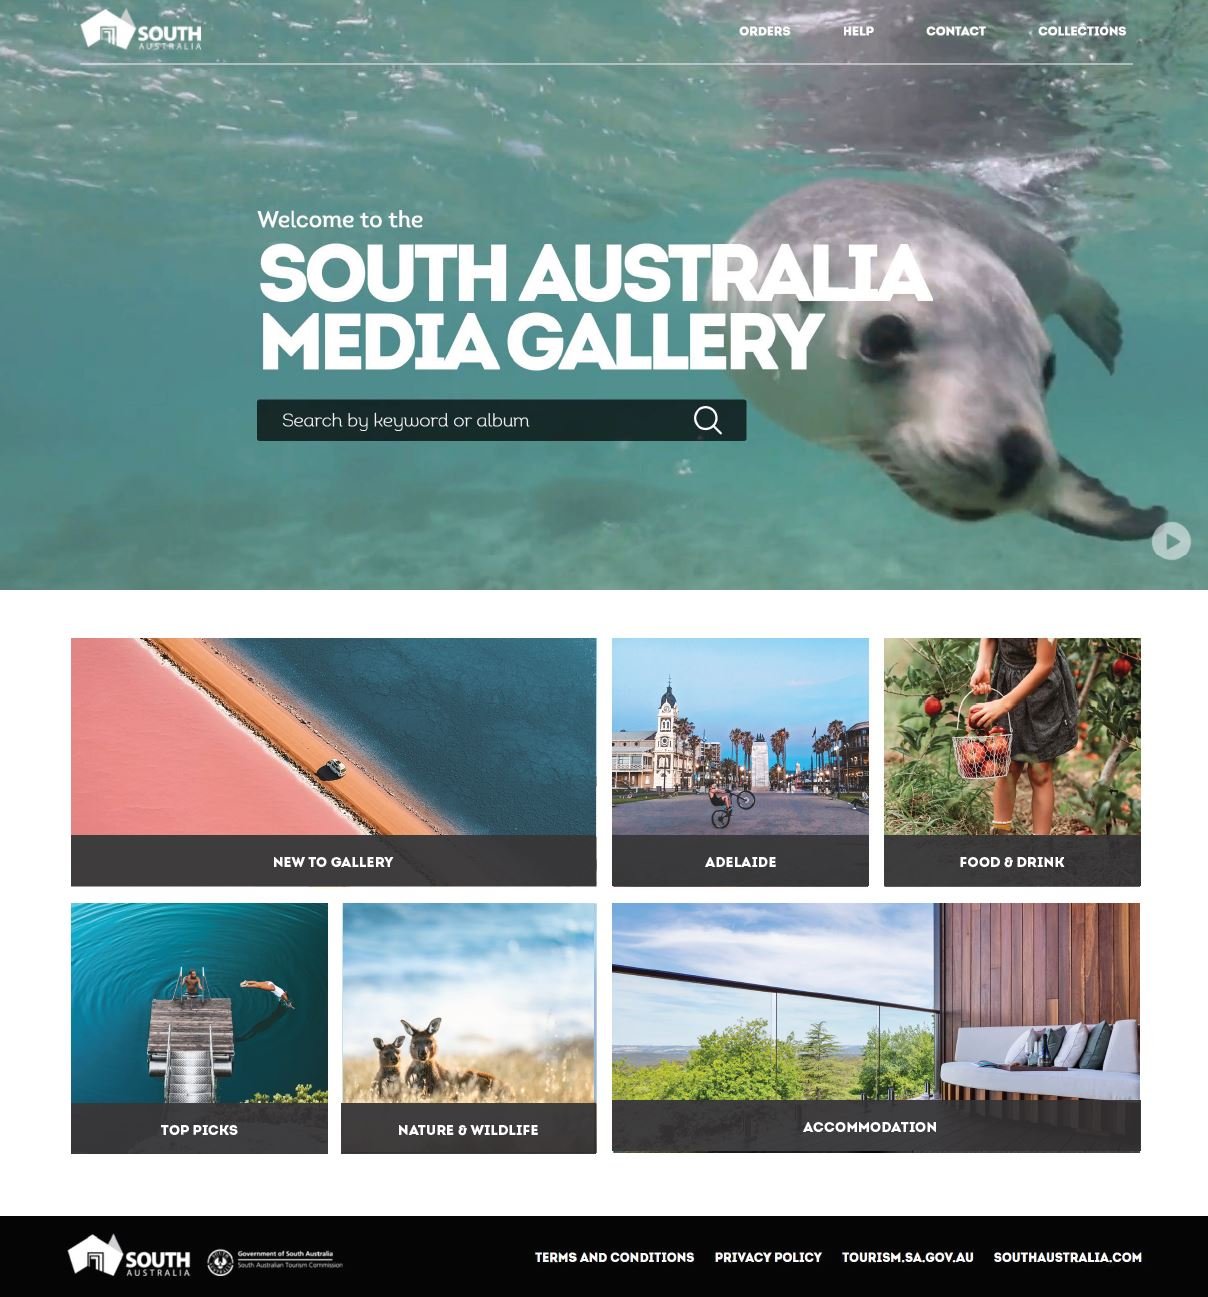 south australian tourism commission contact